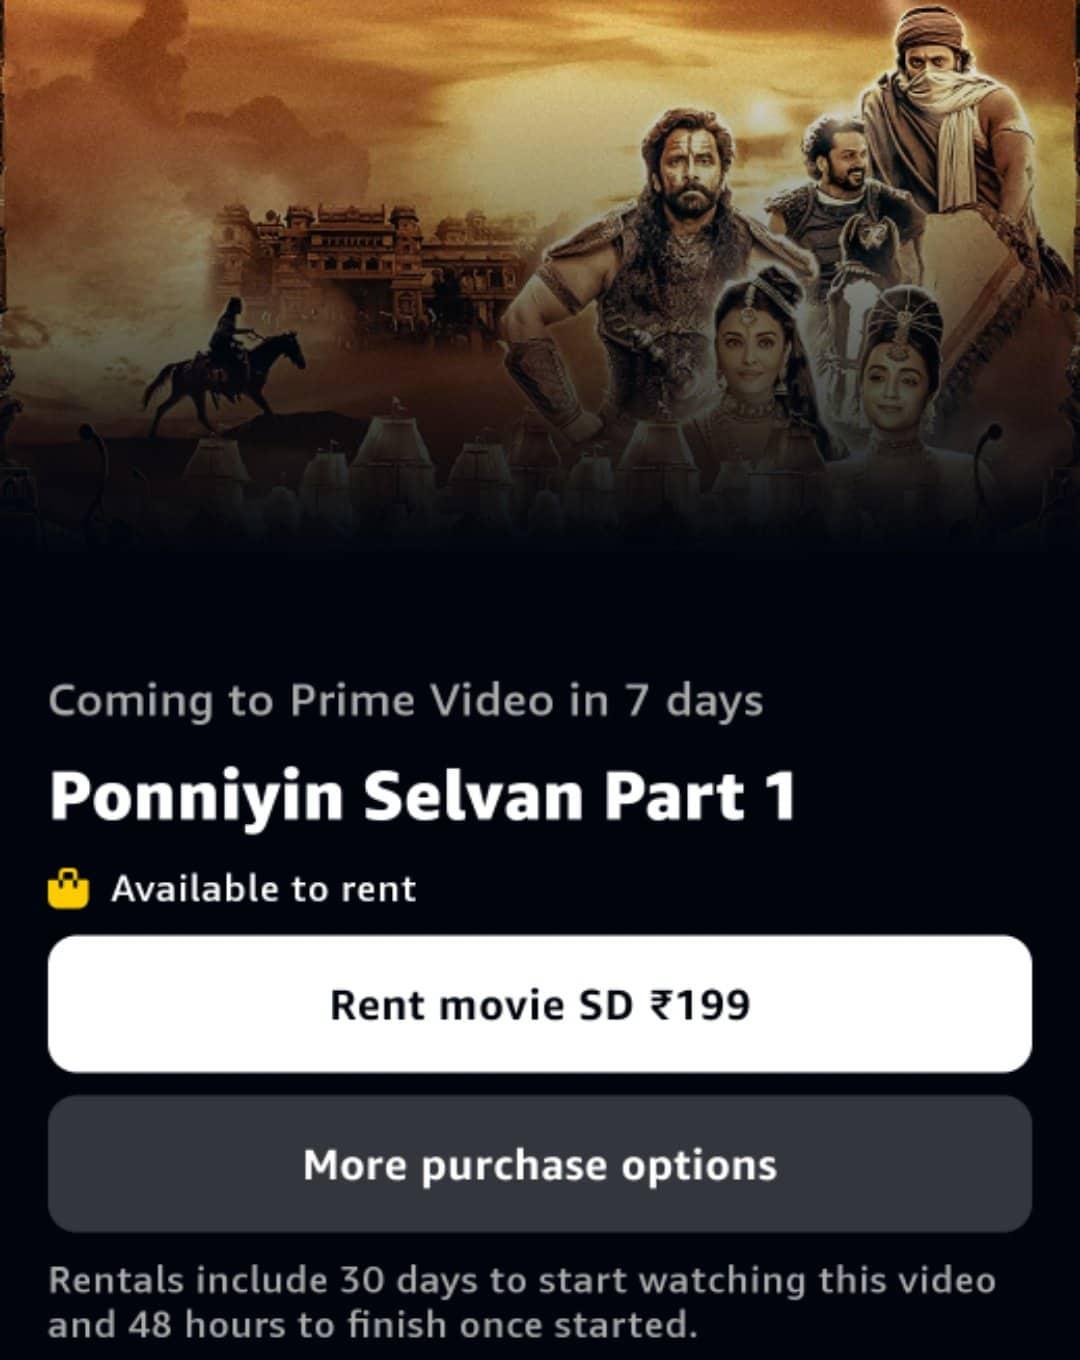 Ponniyin Selvan 1 for Rs